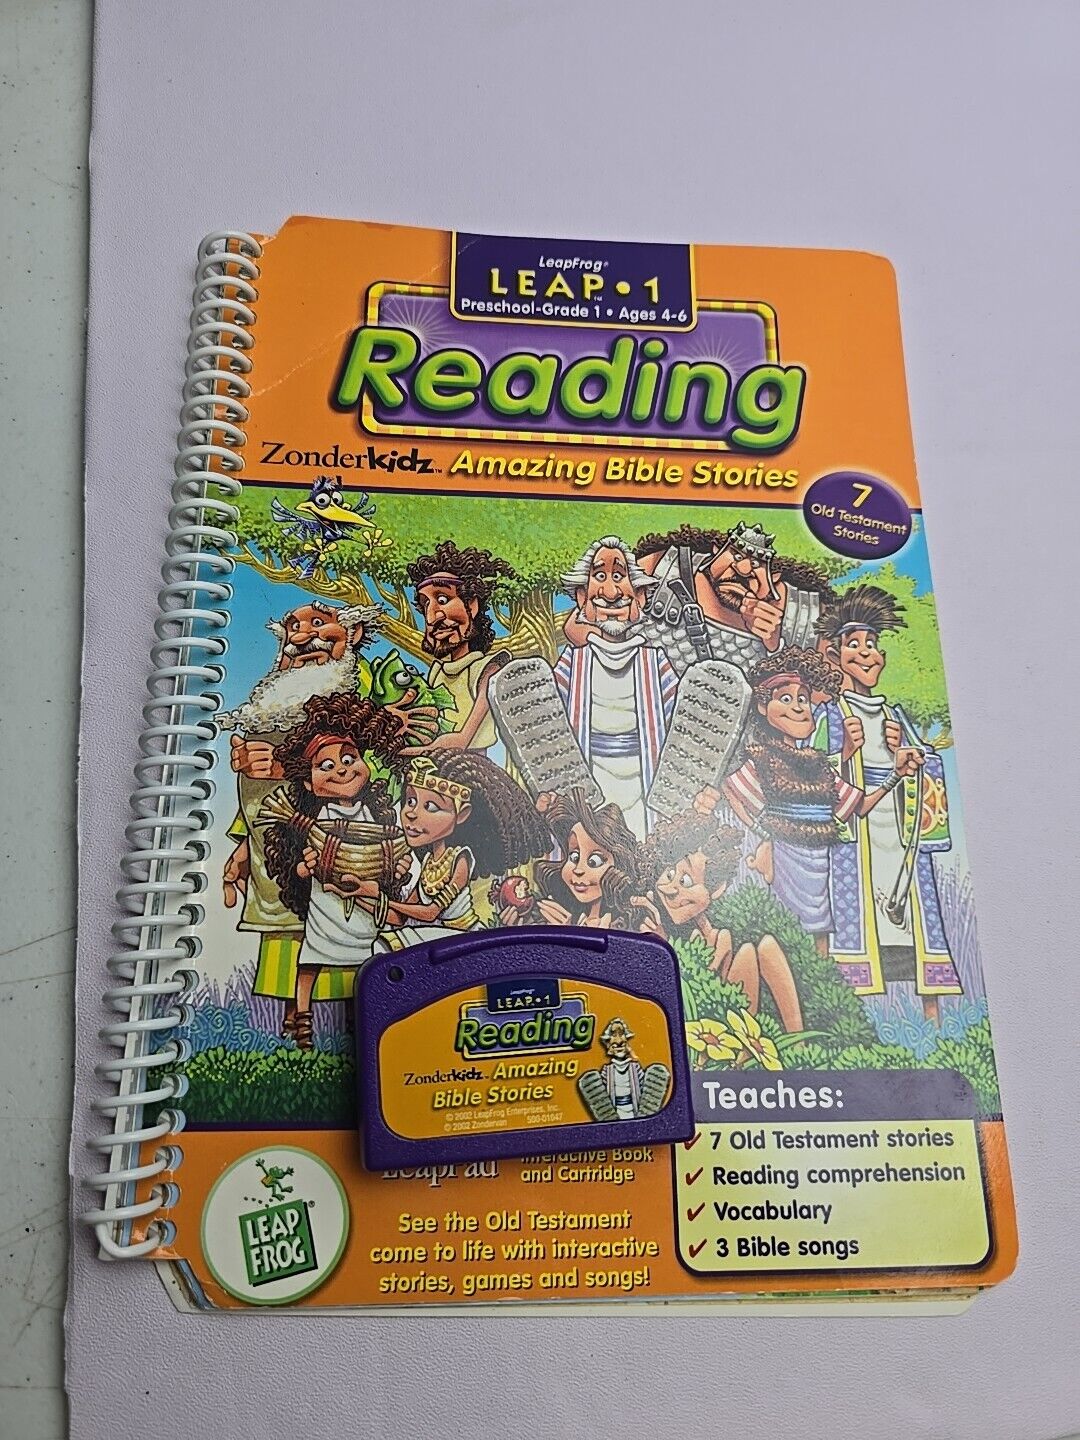 Leapfrog LeapPad Preschool - First Grade Amazing Bible Stories 4-6 LEAP PAD FROG